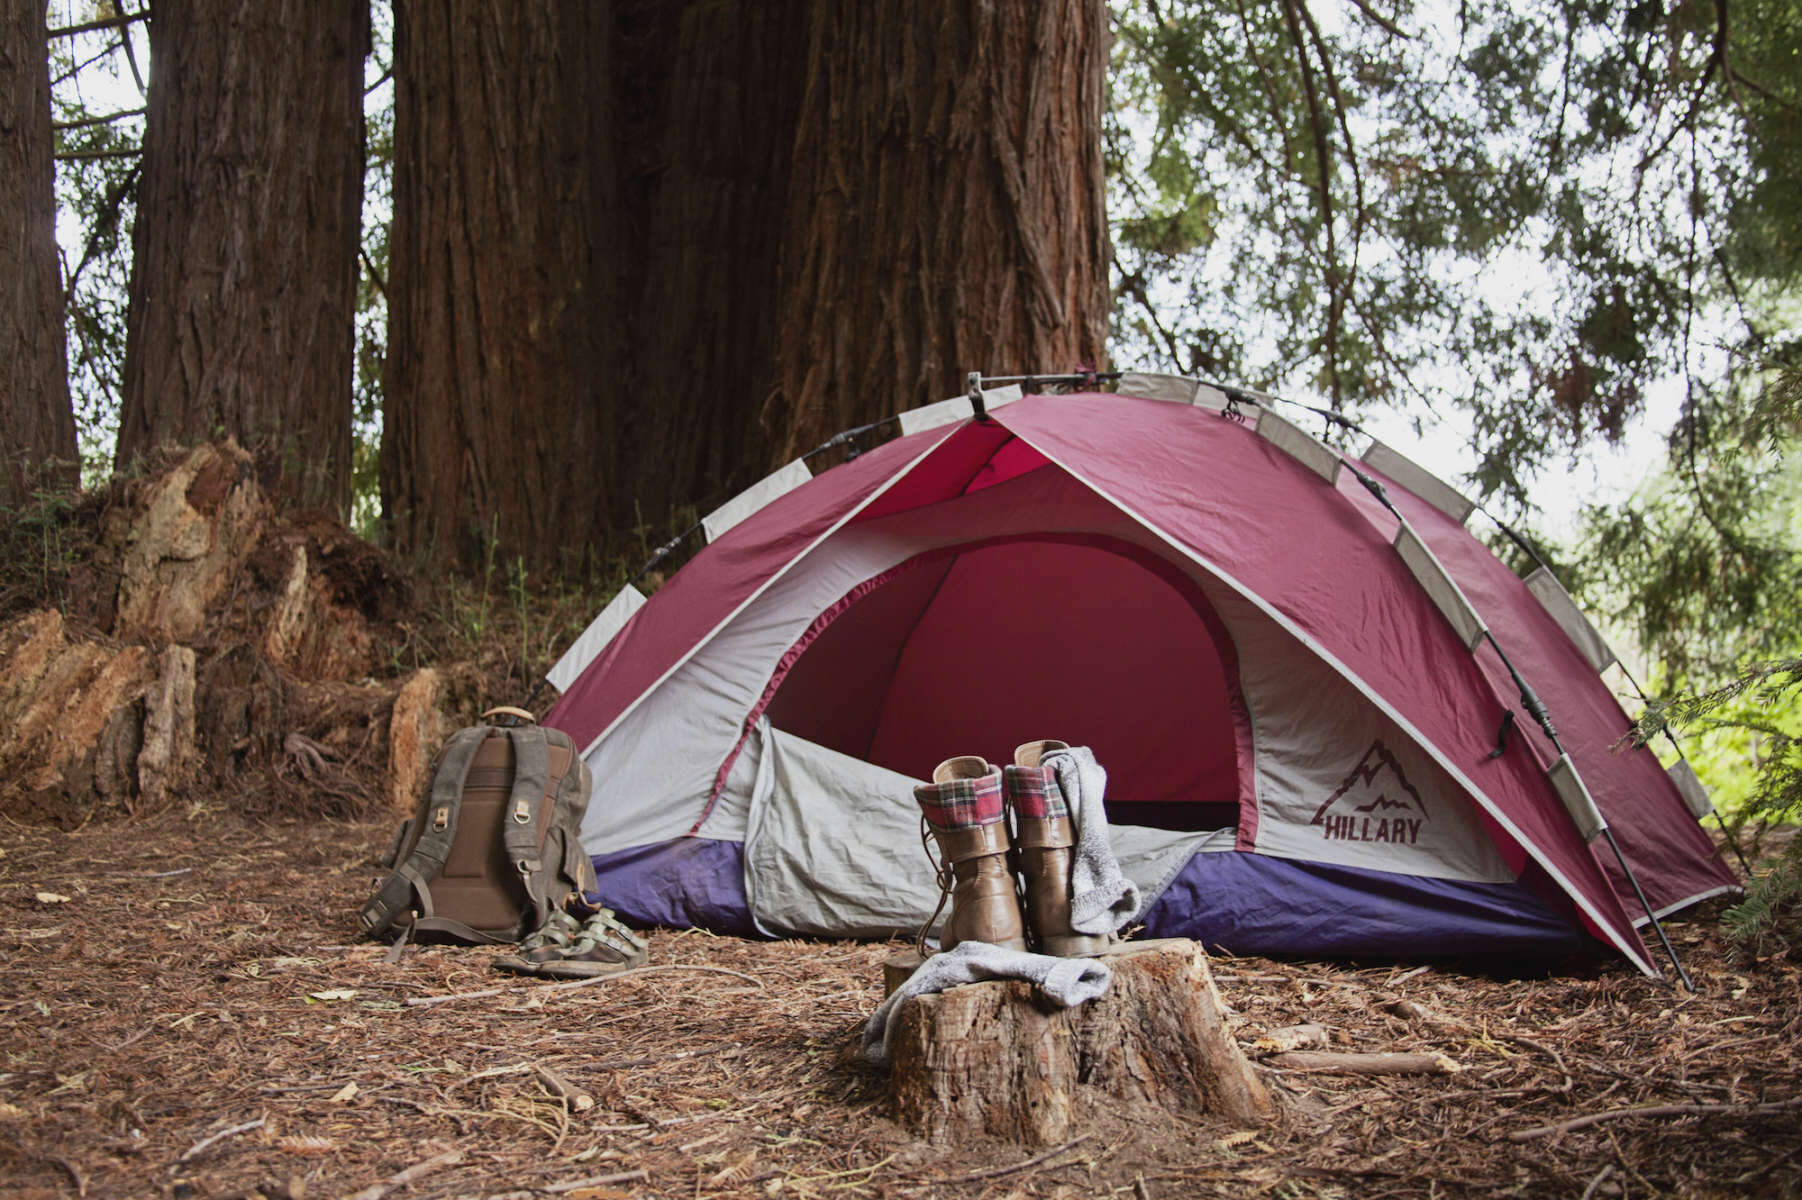 oz-farm-the-campsite-northern-california-tent-lodging.jpg